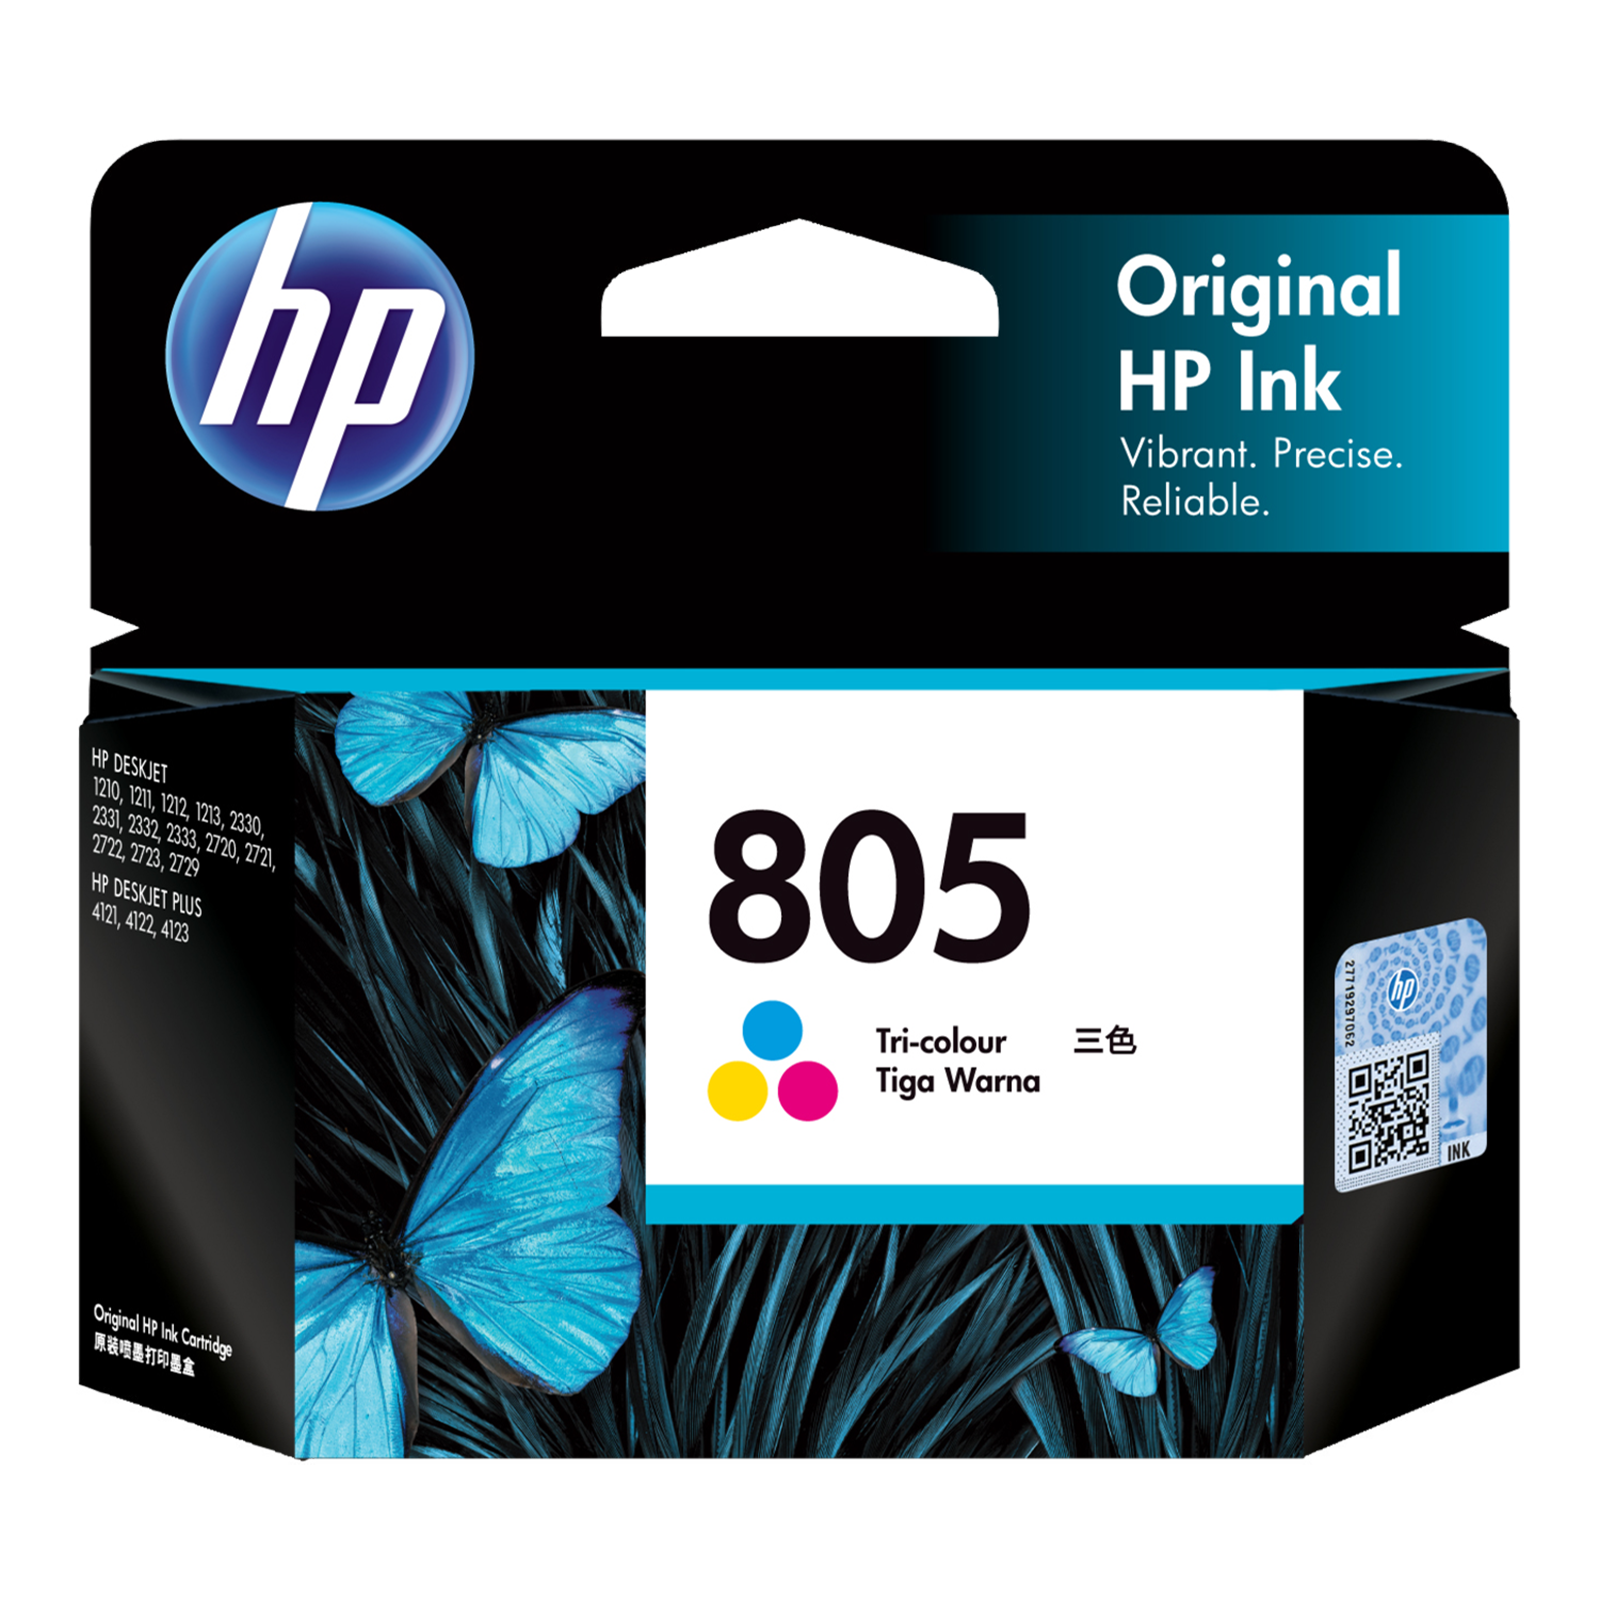 HP 805 Original Pack of 1 Ink Cartridge (3YM72AA, Tri-Colour)_1